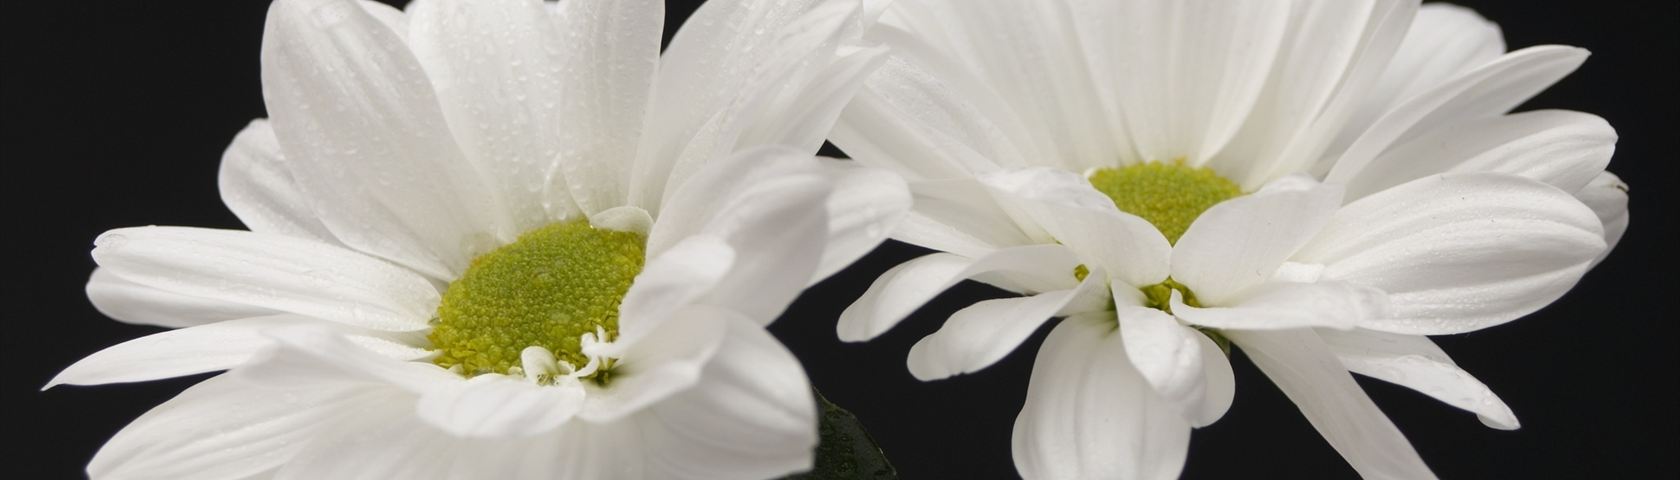 Simple White Chrysanthemum